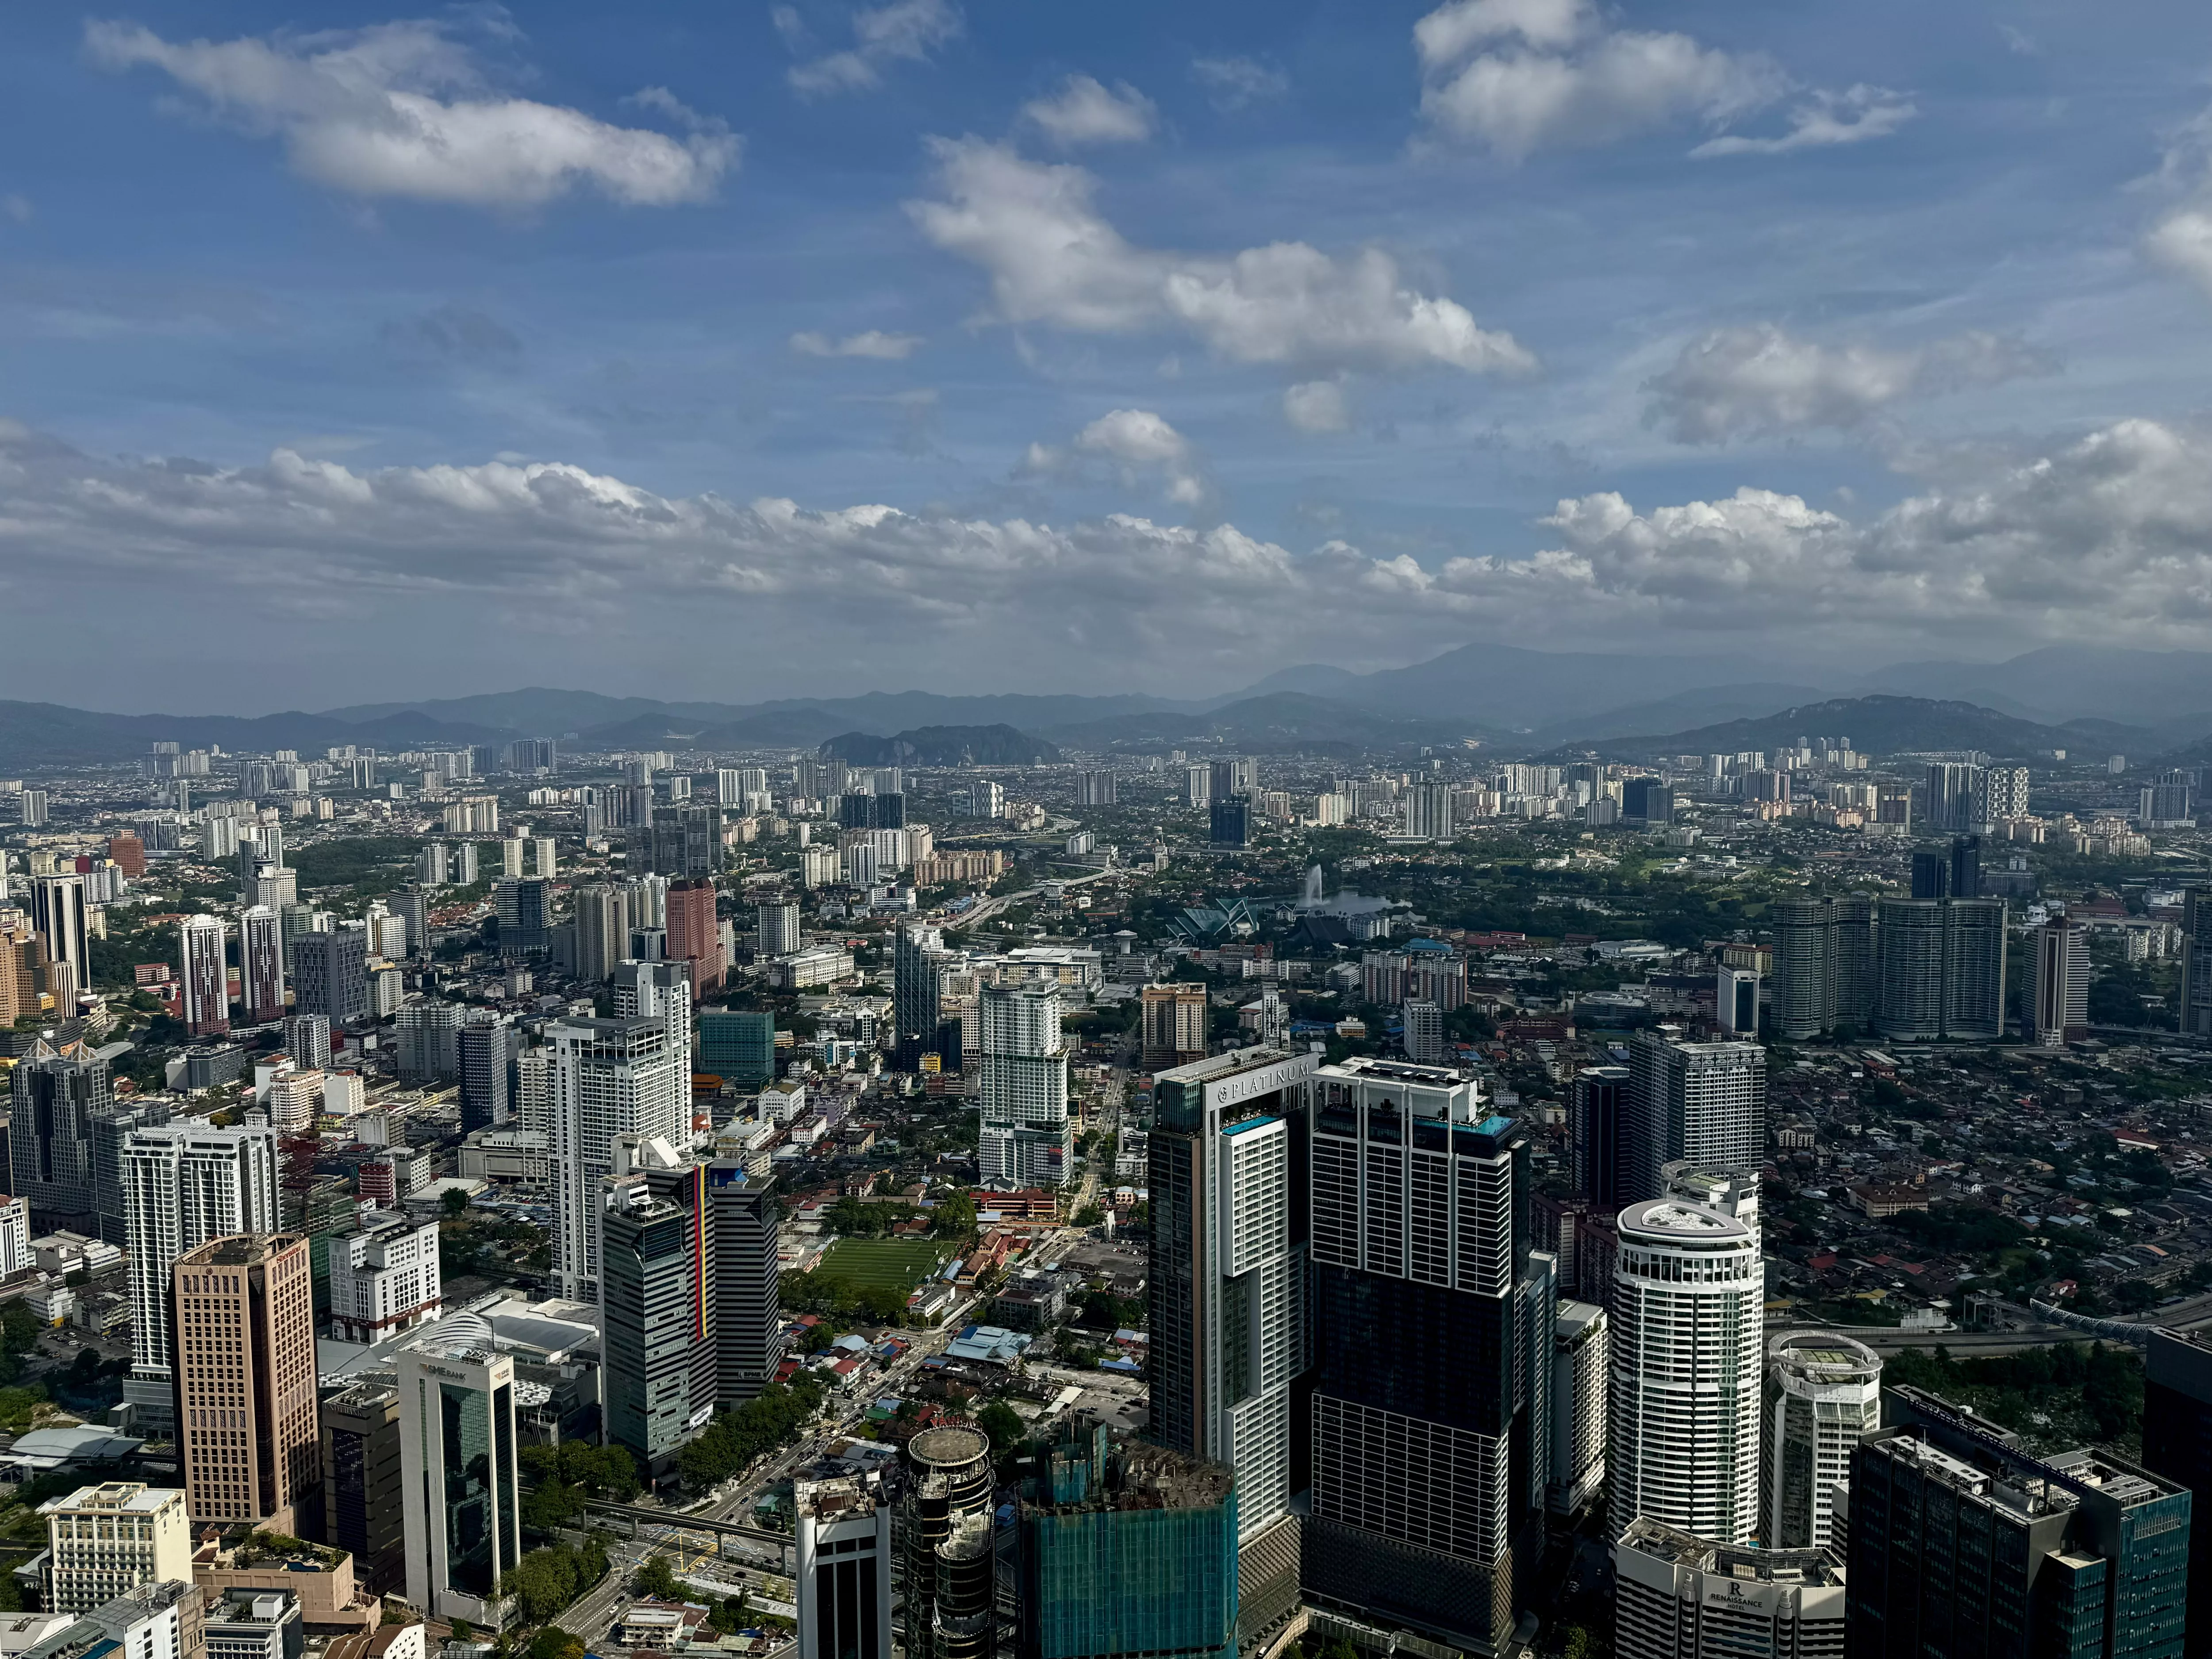 View from the Kuala Lumpur Tower, Kuala Lumpur, Malaysia